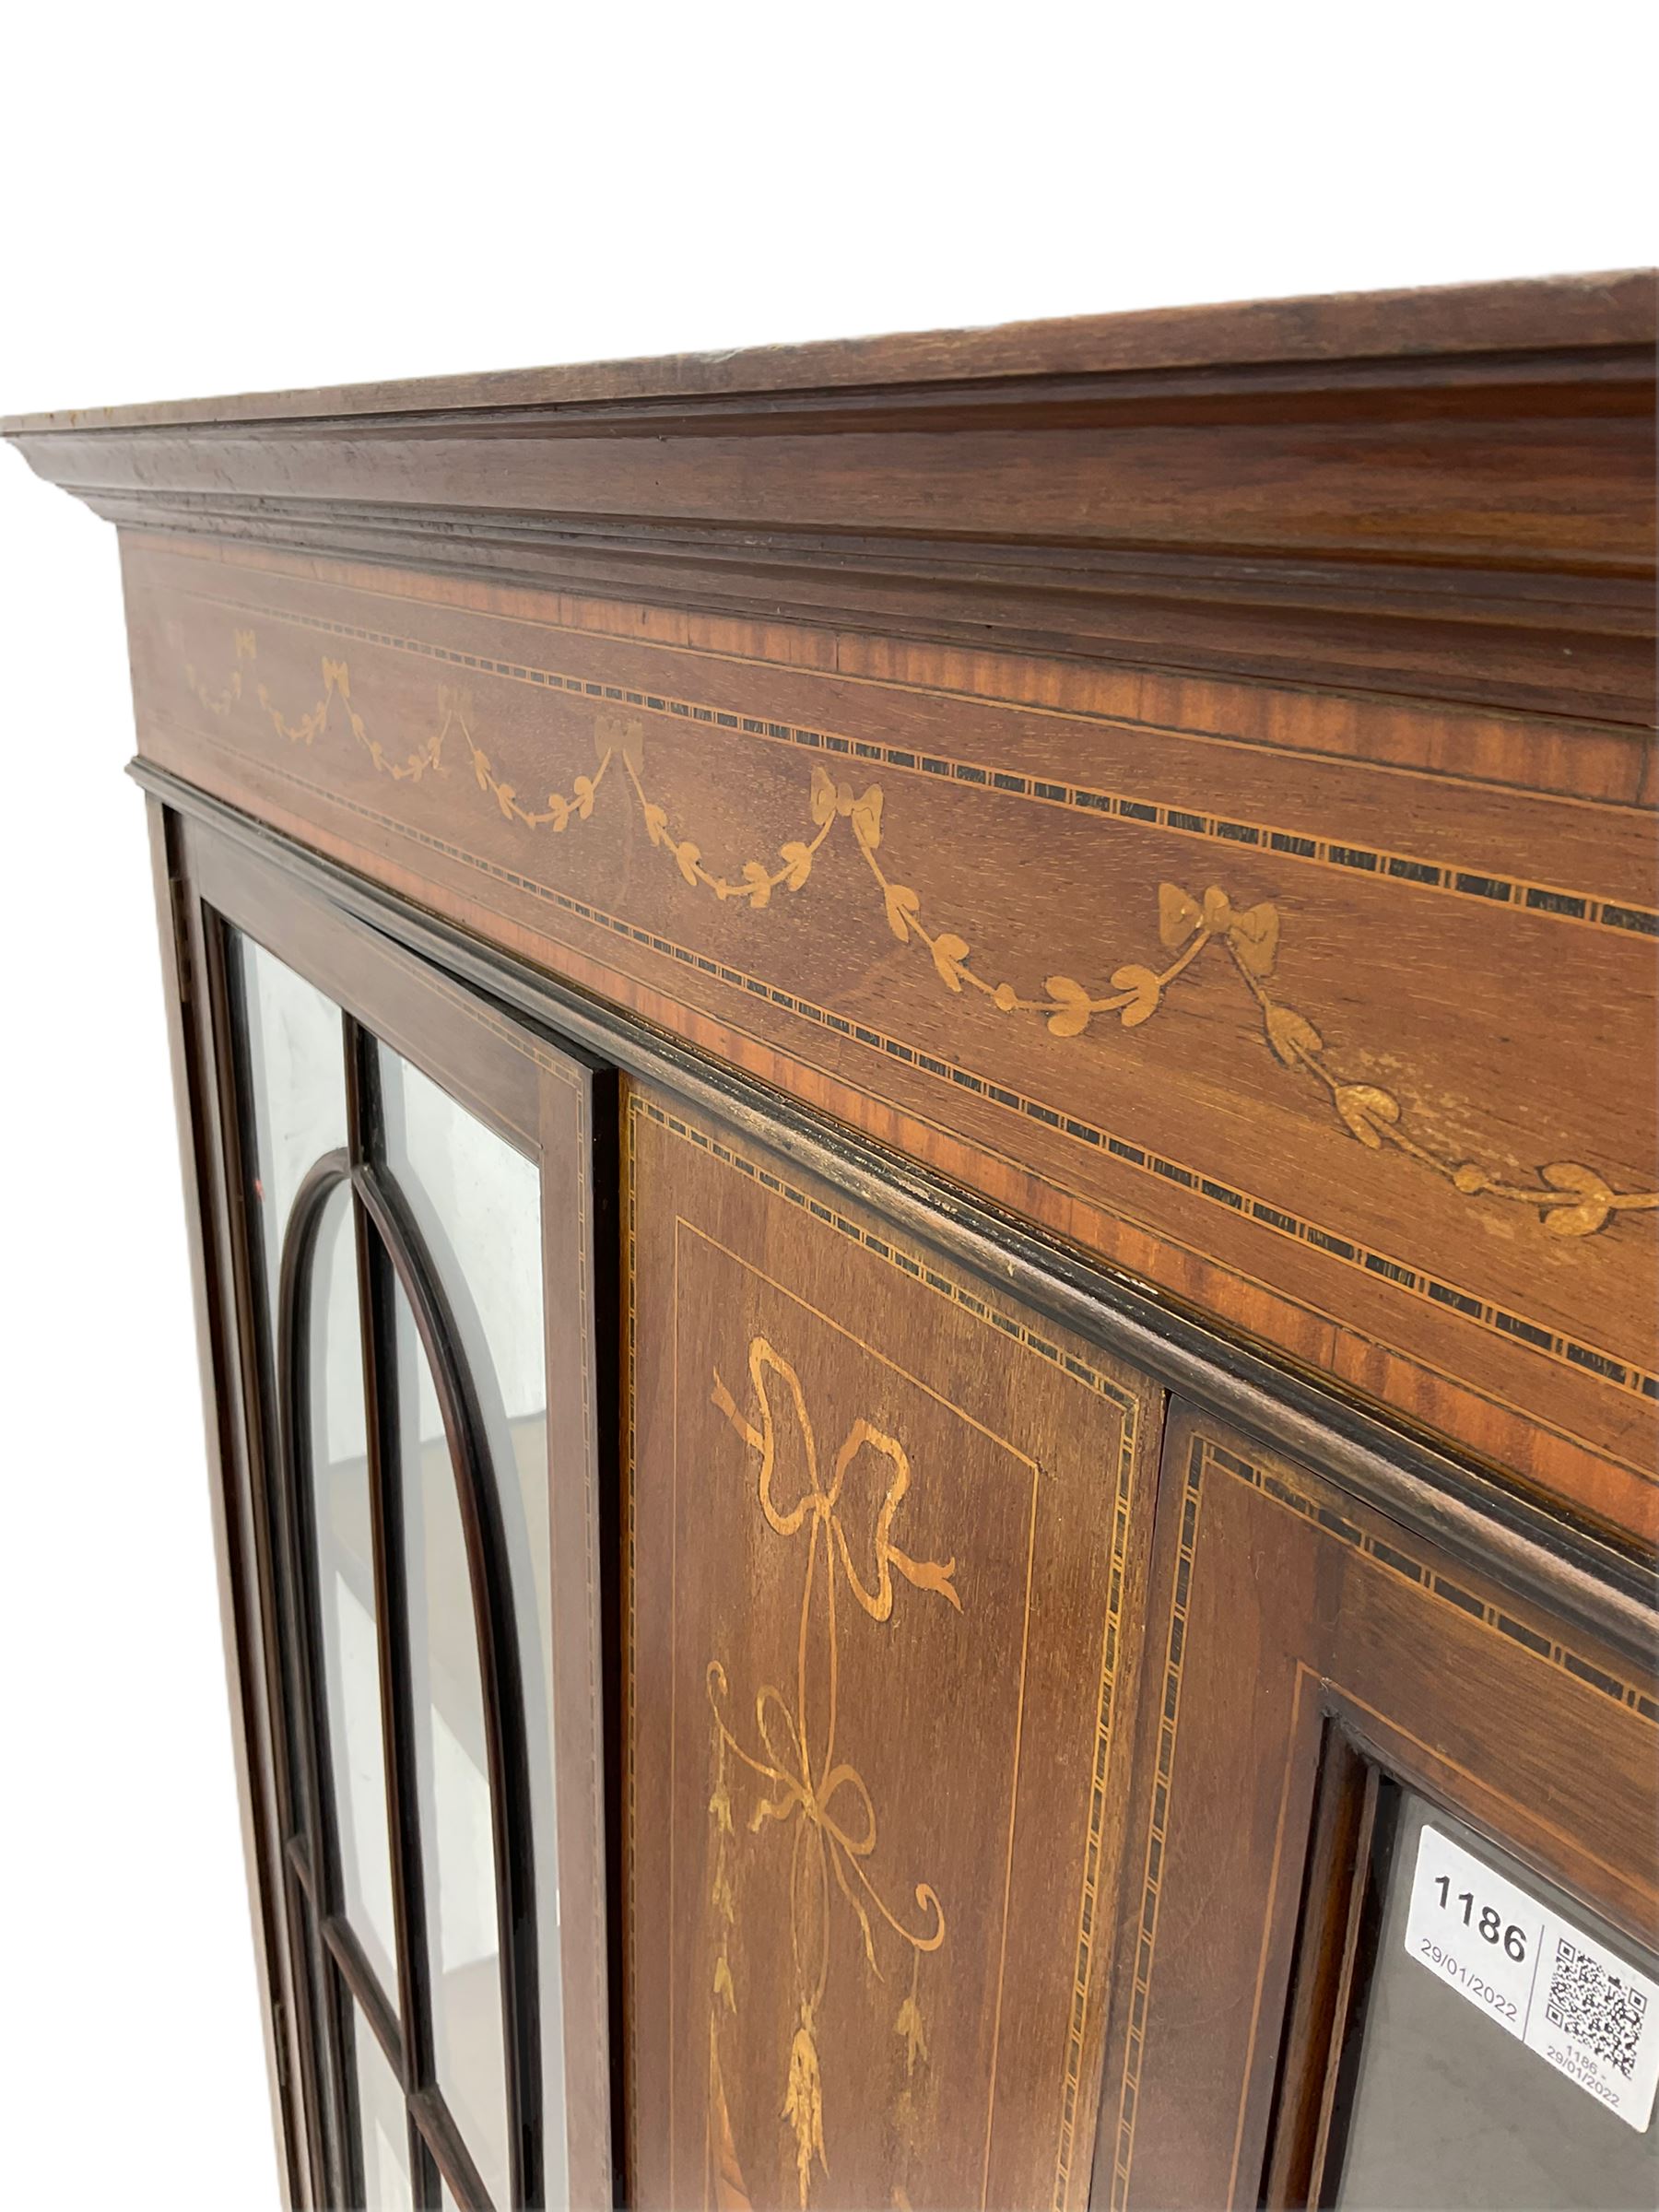 Edwardian inlaid mahogany display cabinet - Image 4 of 9